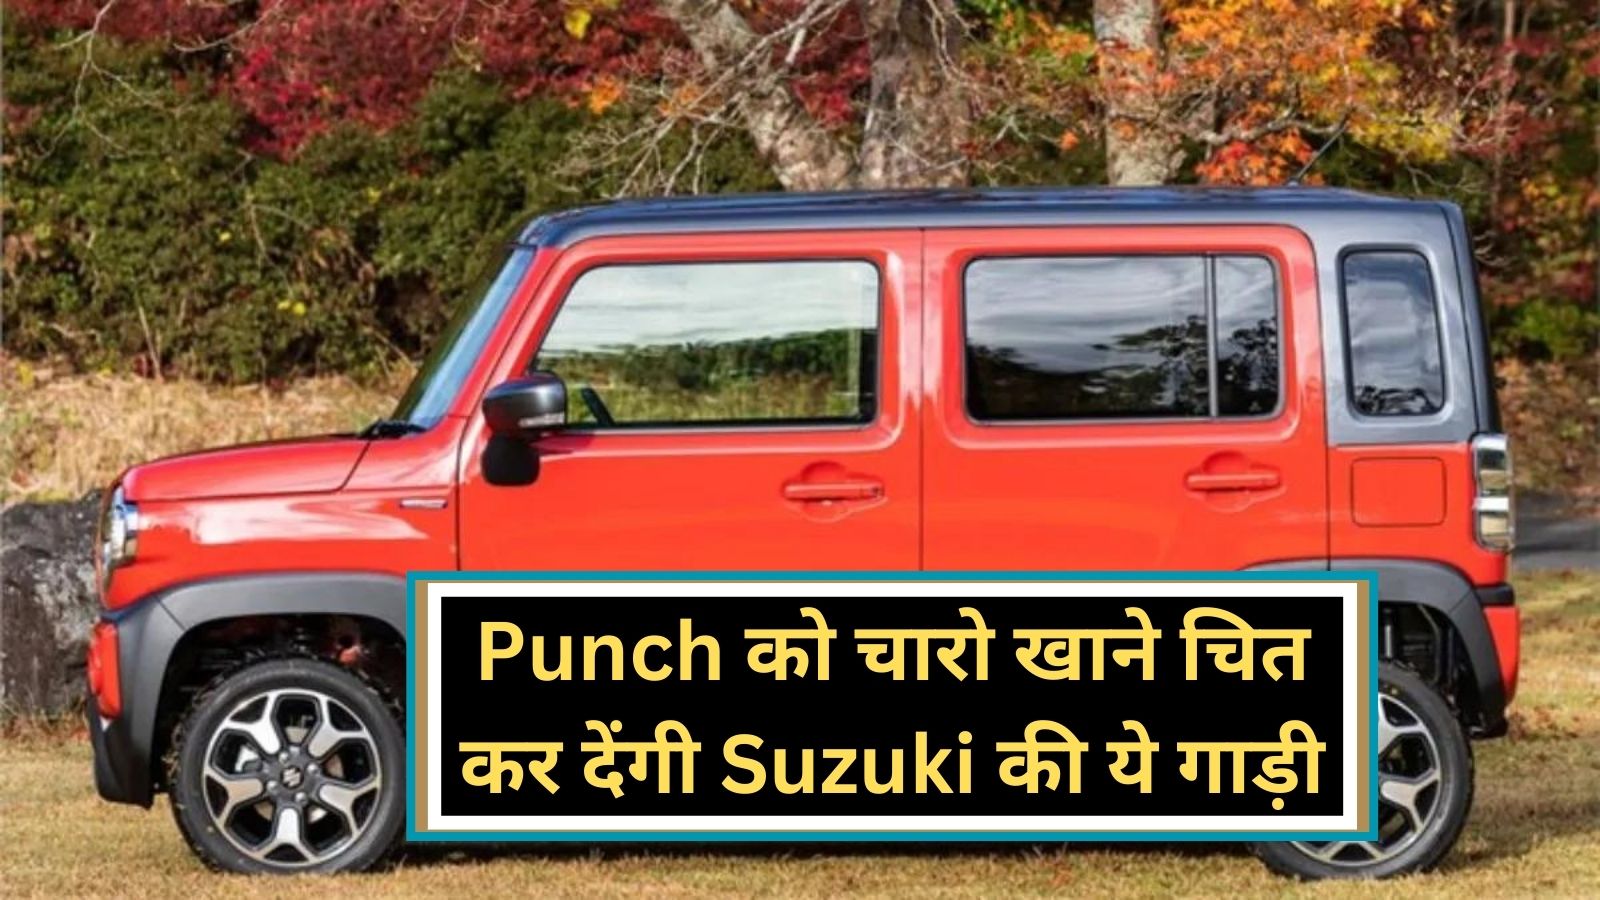 Maruti Suzuki Hustler:Punch को चारो खाने चित कर देंगी Suzuki की ये गाड़ी, लाजवाब फीचर्स और माइलेज भी दमदार